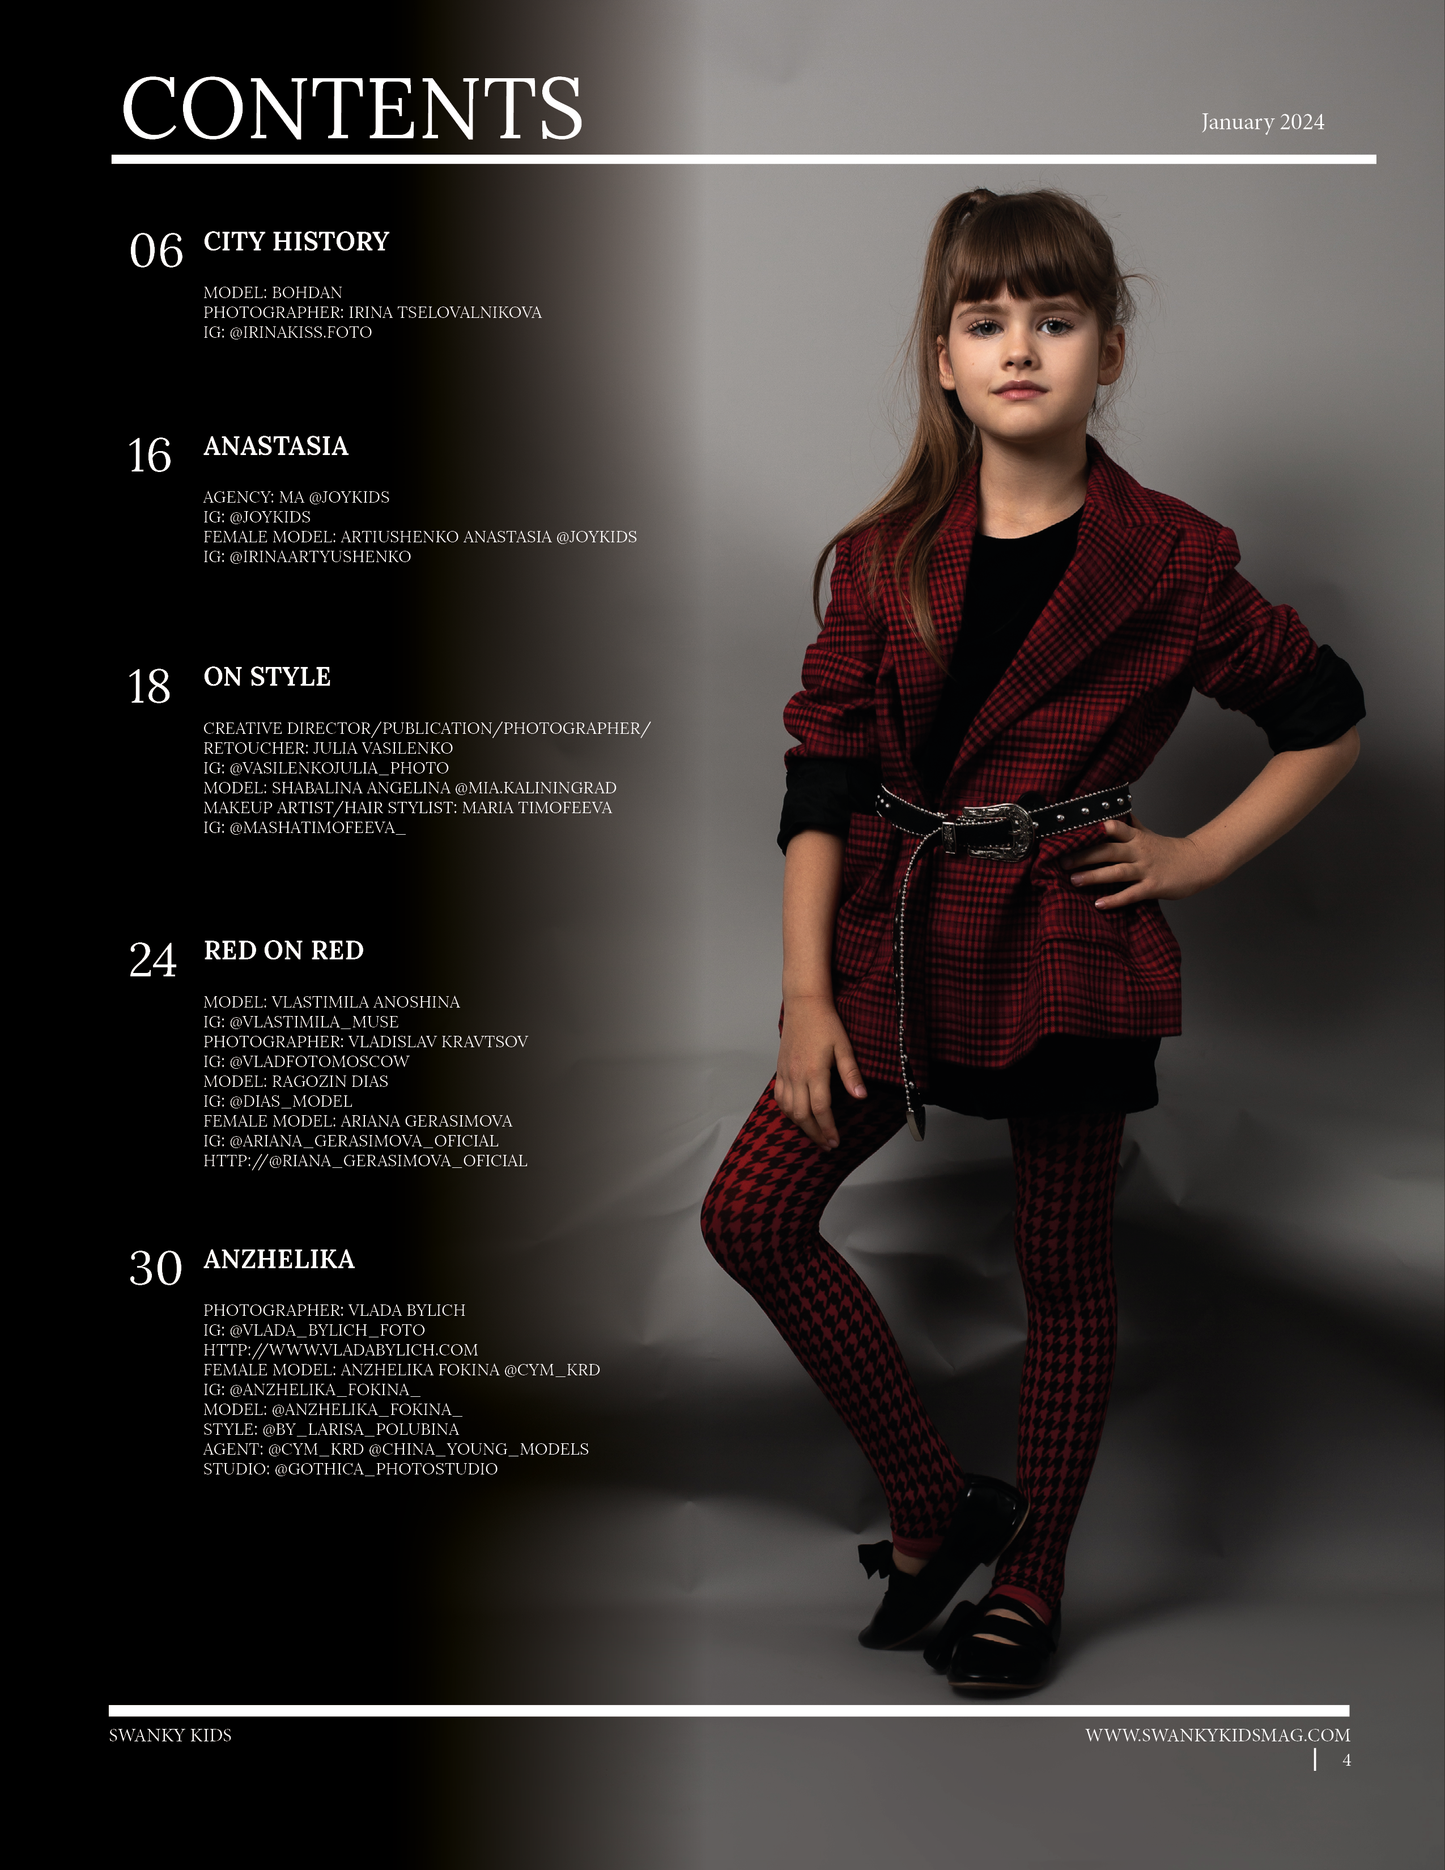 Swanky Kids Magazine - January 2024: The Kids & Teens Edition Issue 2